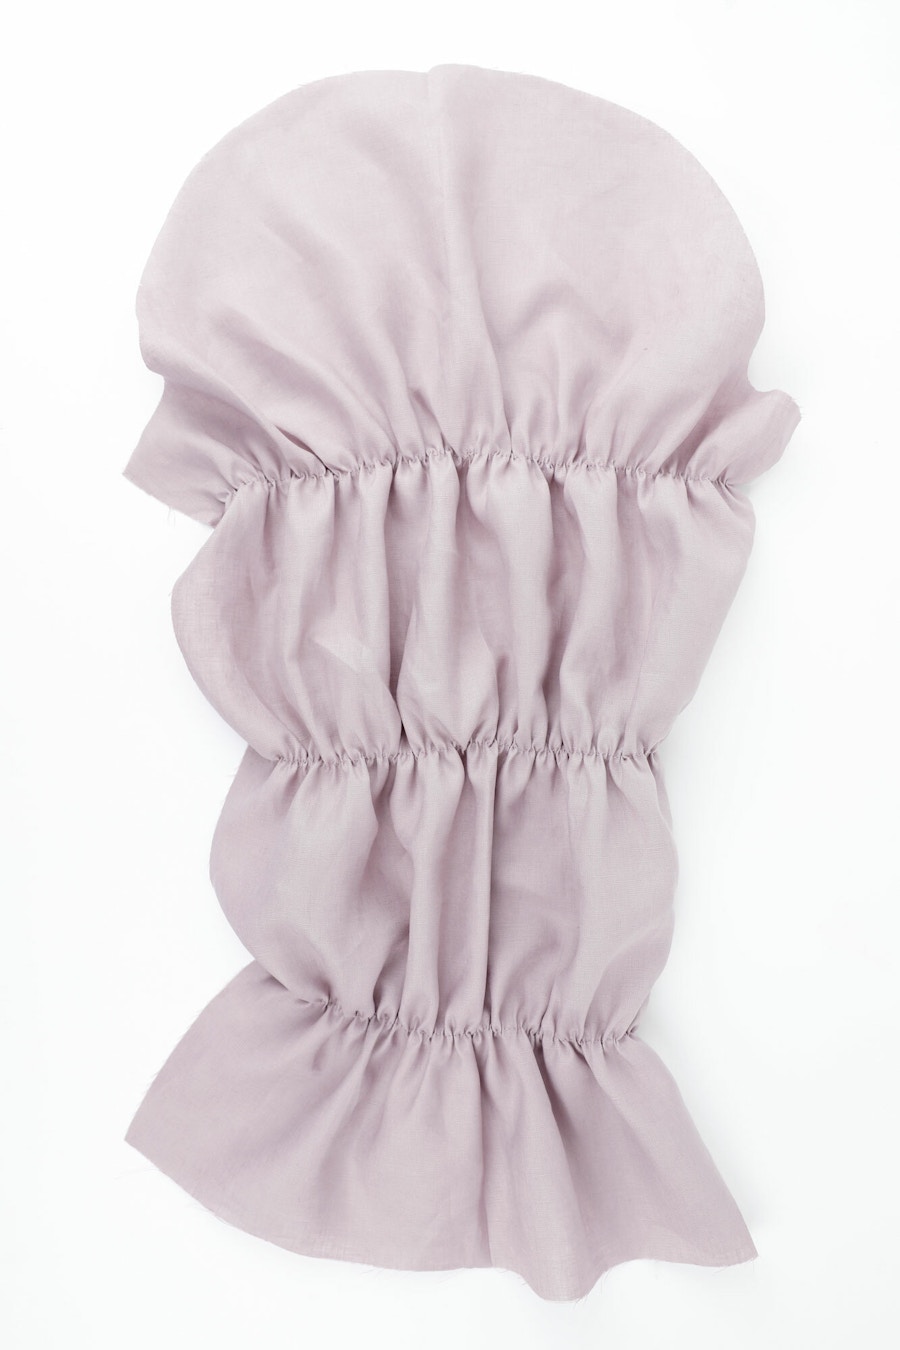 Sewn Sleeve Elastic Veronika Tucker Freya Dress The Fabric Store Blog